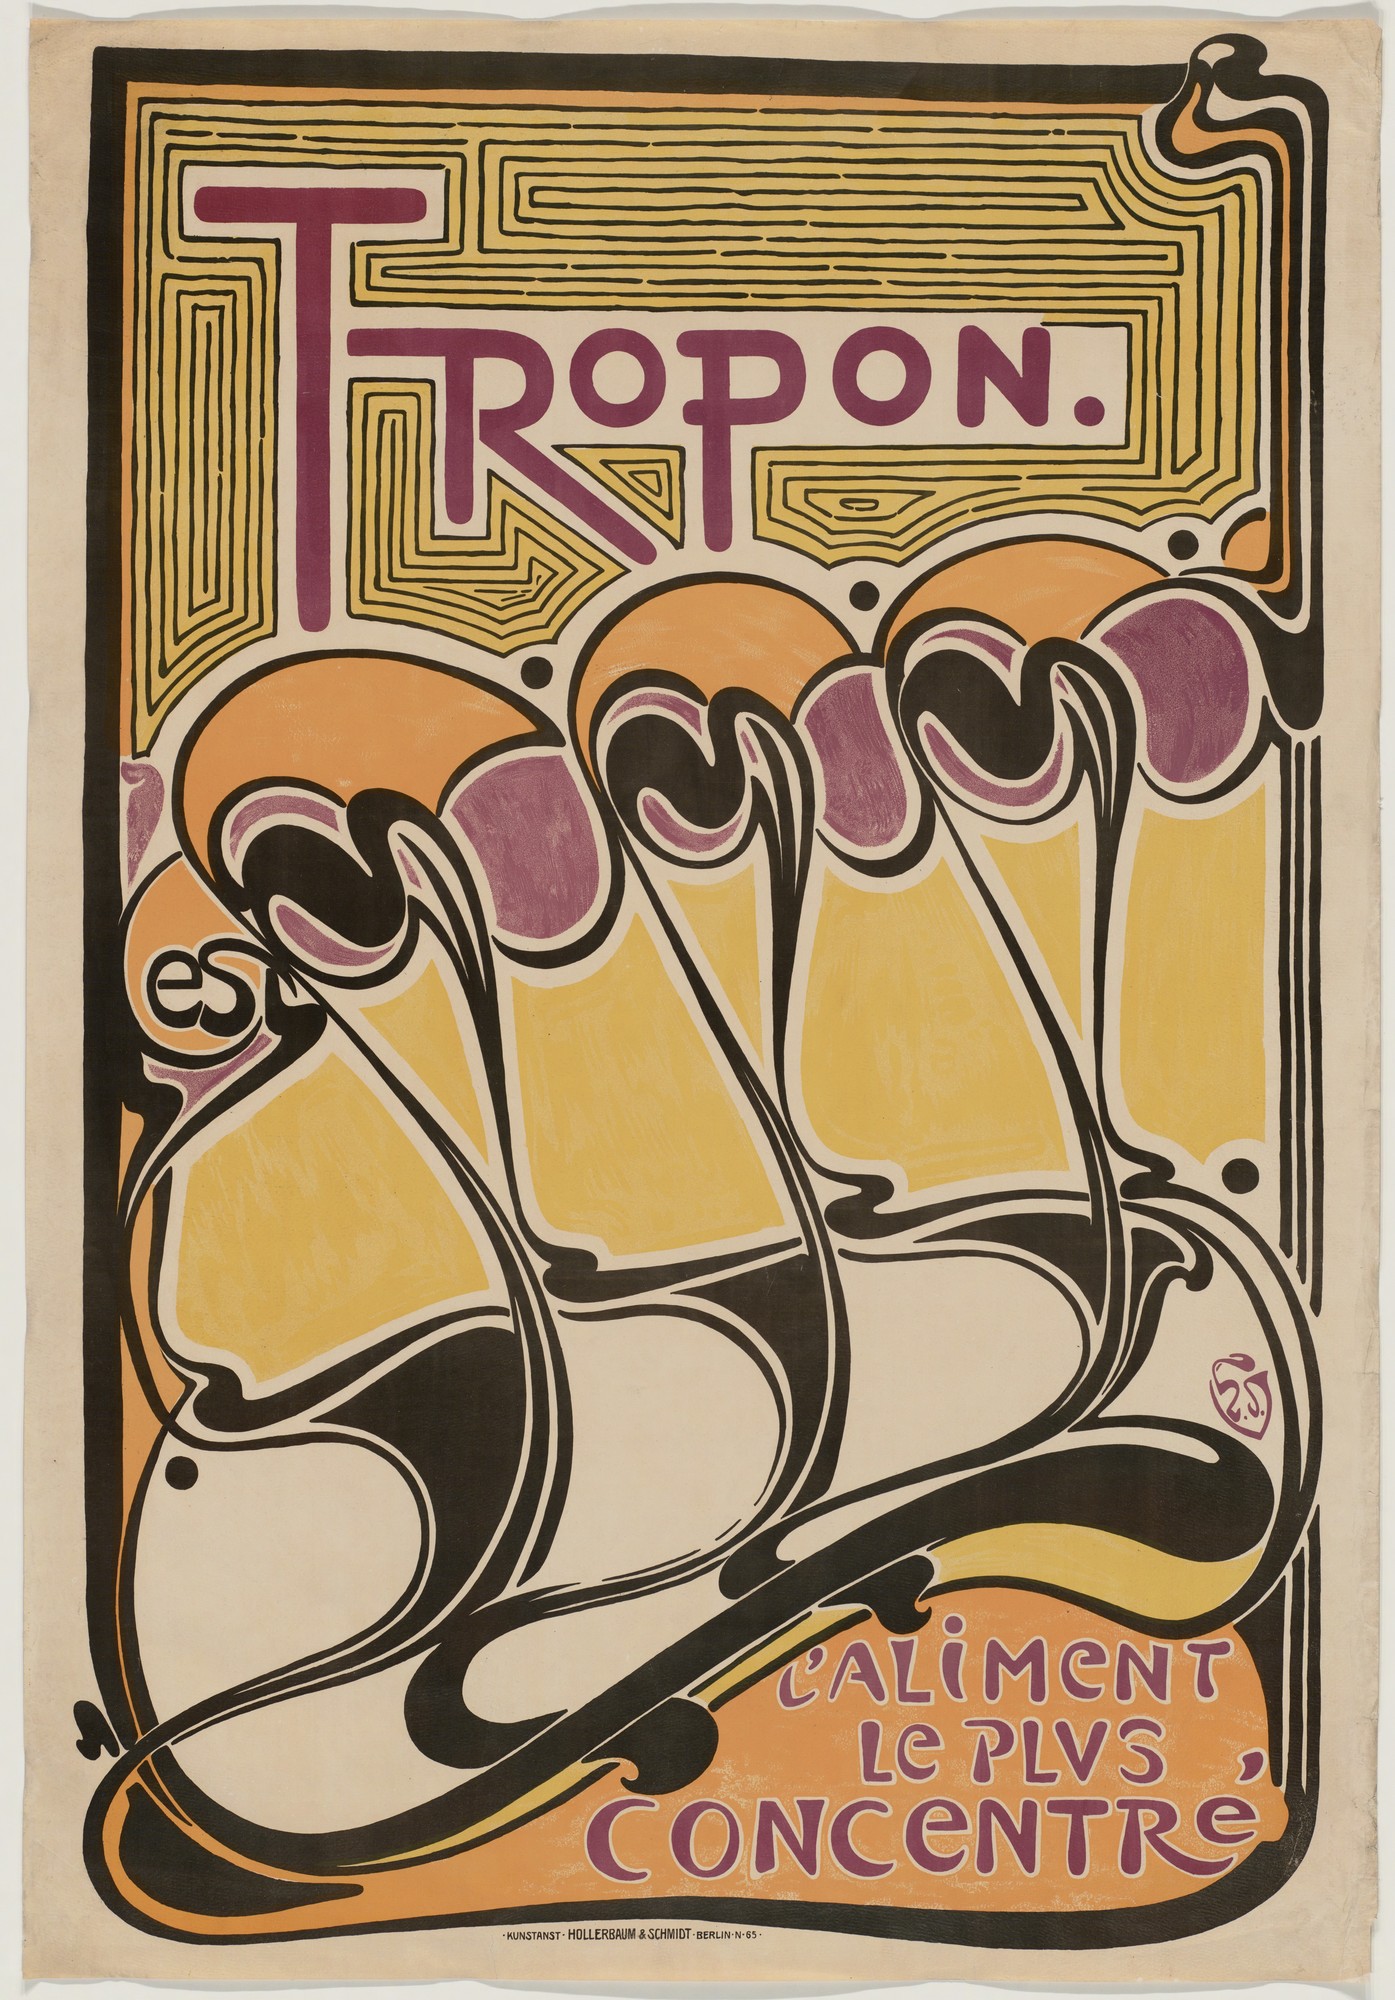 Henry van de Velde, Tropon poster, 1899, lithograph, 44 x 30 3/8 inches, (MoMA)